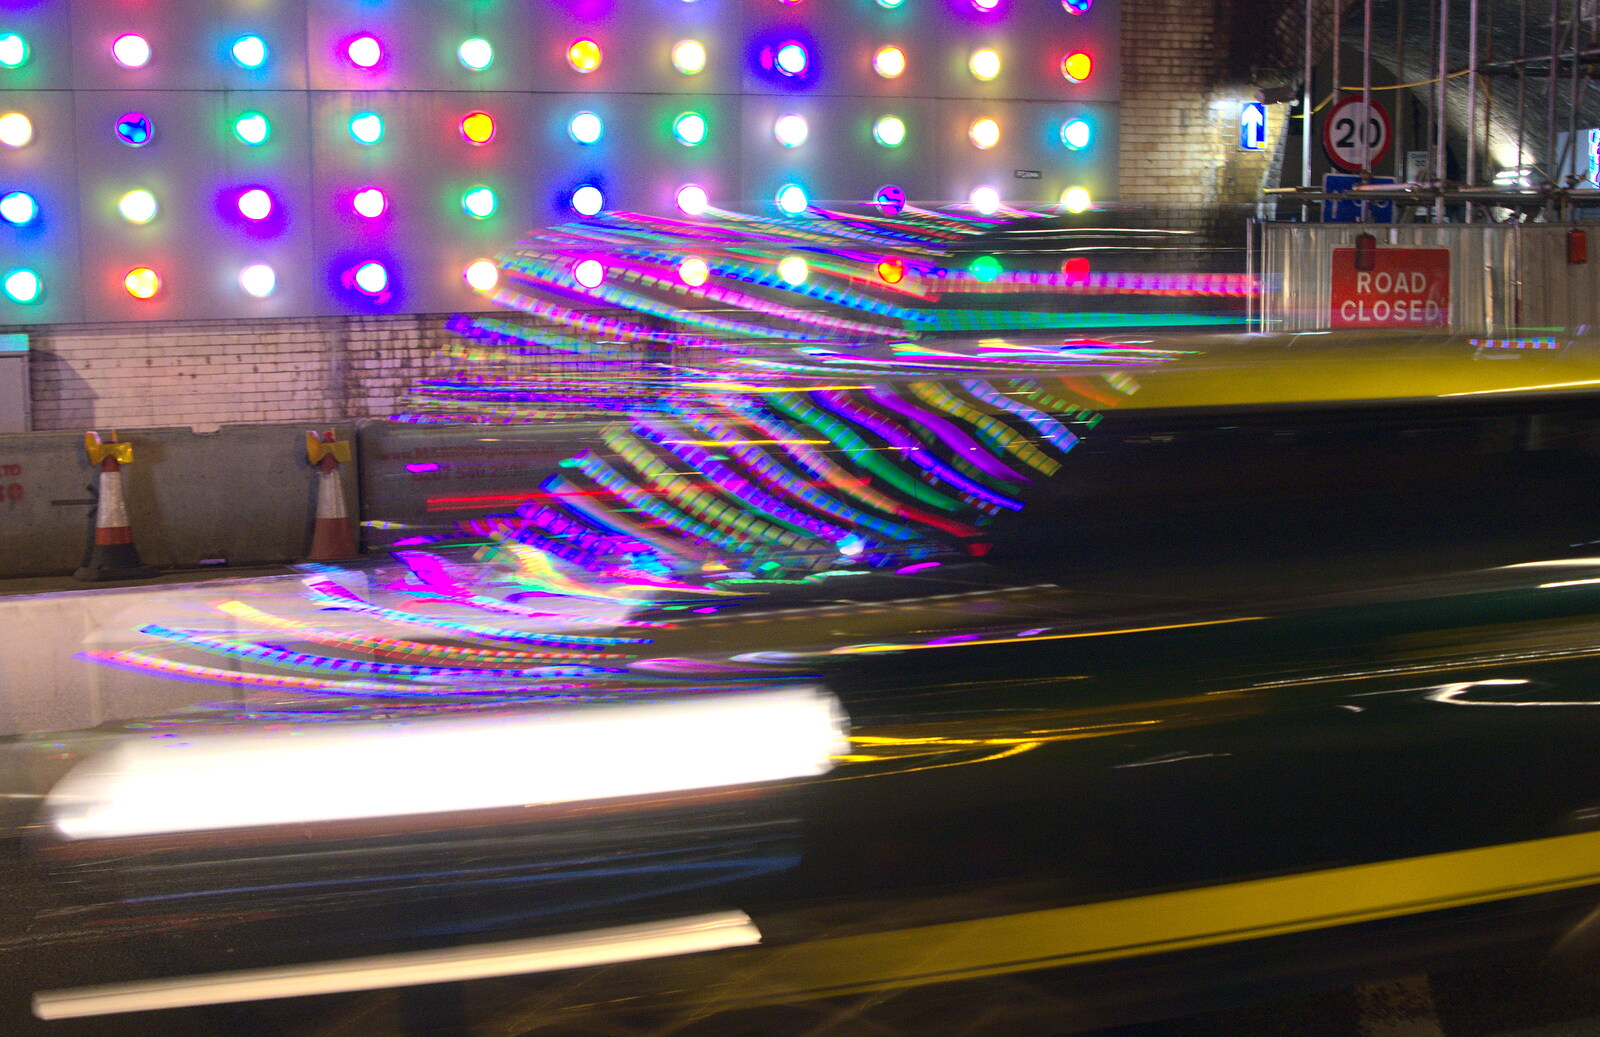 The lights of 'Smartie Bridge' reflect in a car from SwiftKey Innovation Week, Southwark Bridge Road, London - 7th October 2015